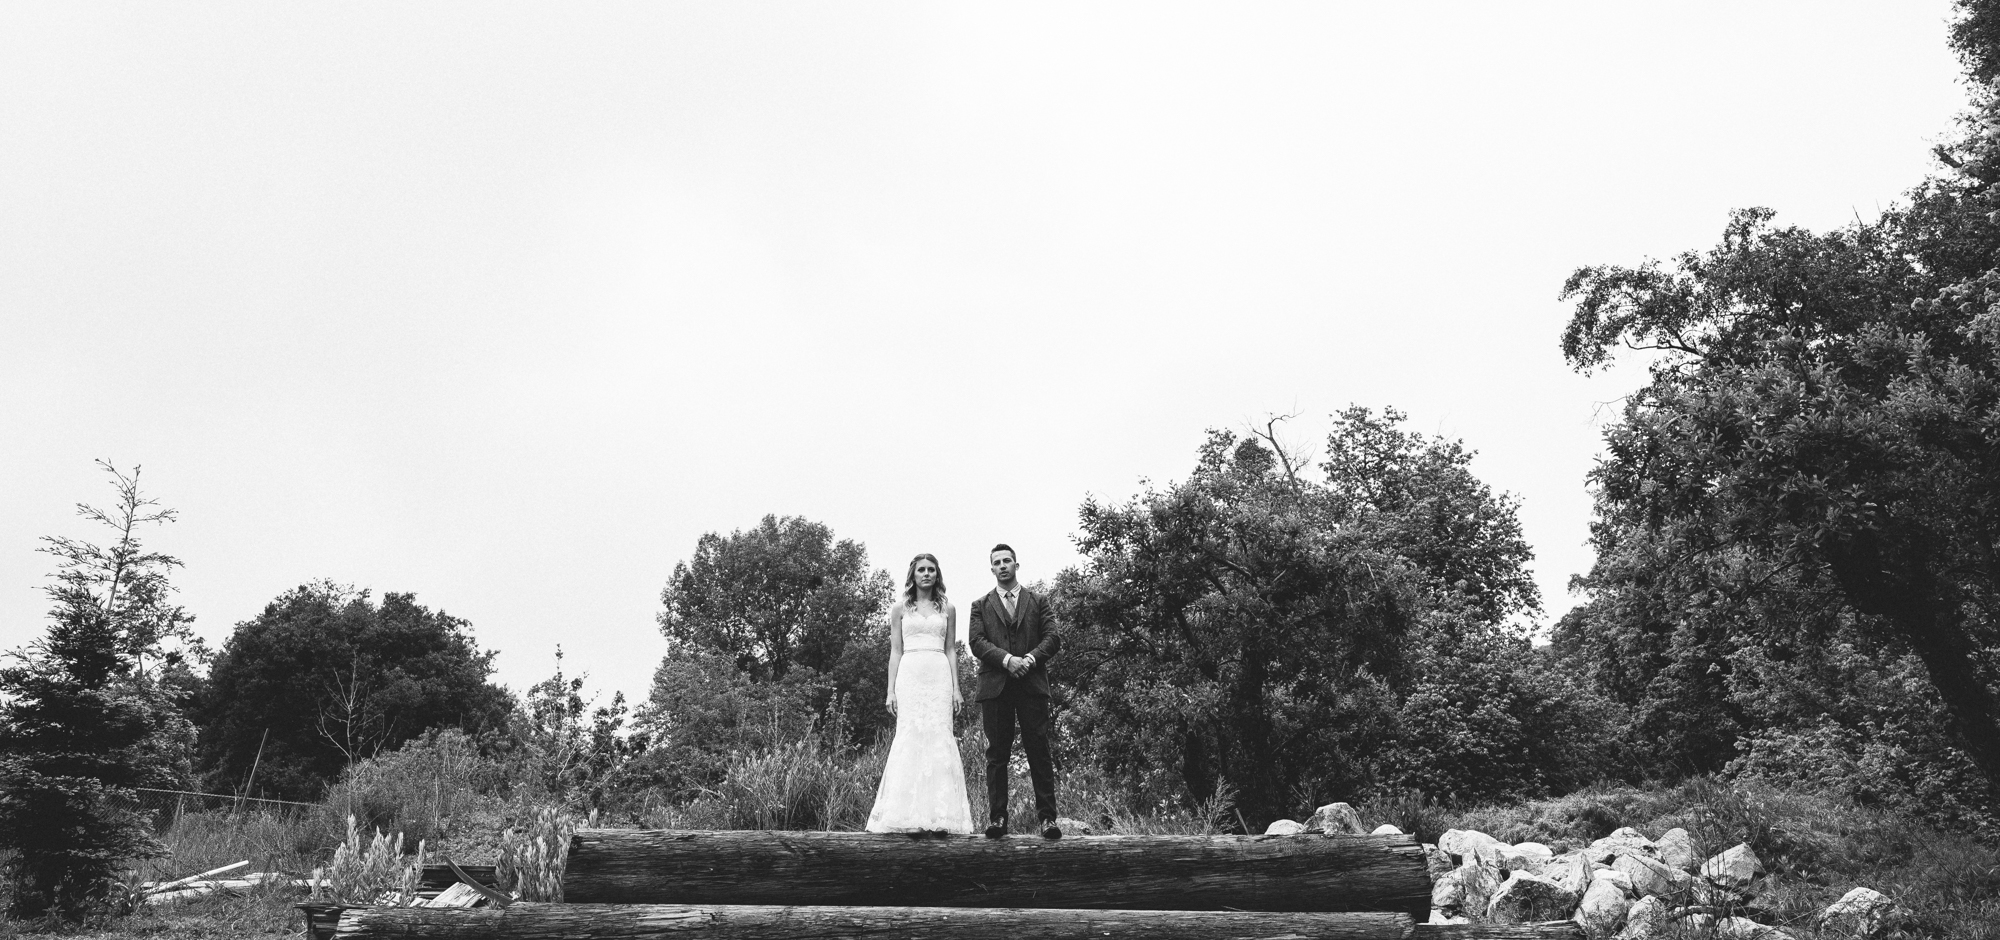 Isaiah & Taylor Photography - Los Angeles - Destination Wedding Photographers - Oak Glen Wilshire Ranch Foggy Forest Wedding-43.jpg